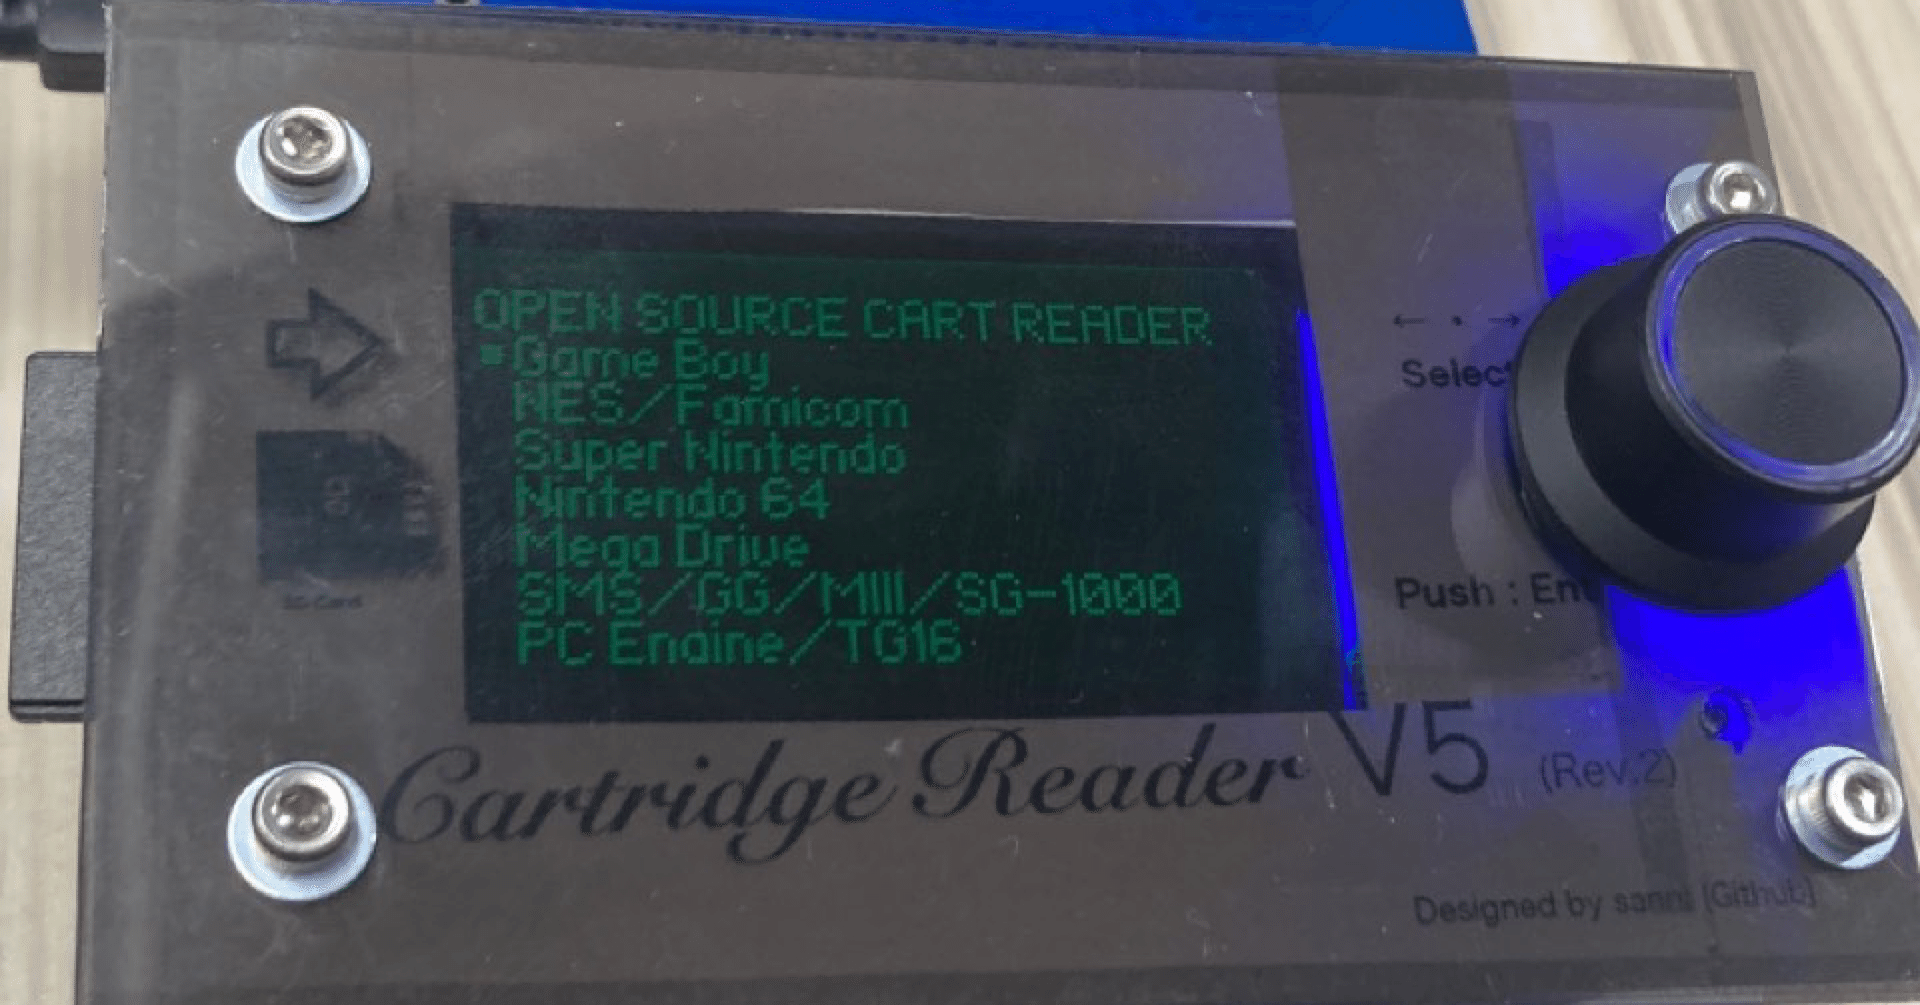 Cartridge Reader V5 Rev2を作る ー その1 準備｜Uri MARS